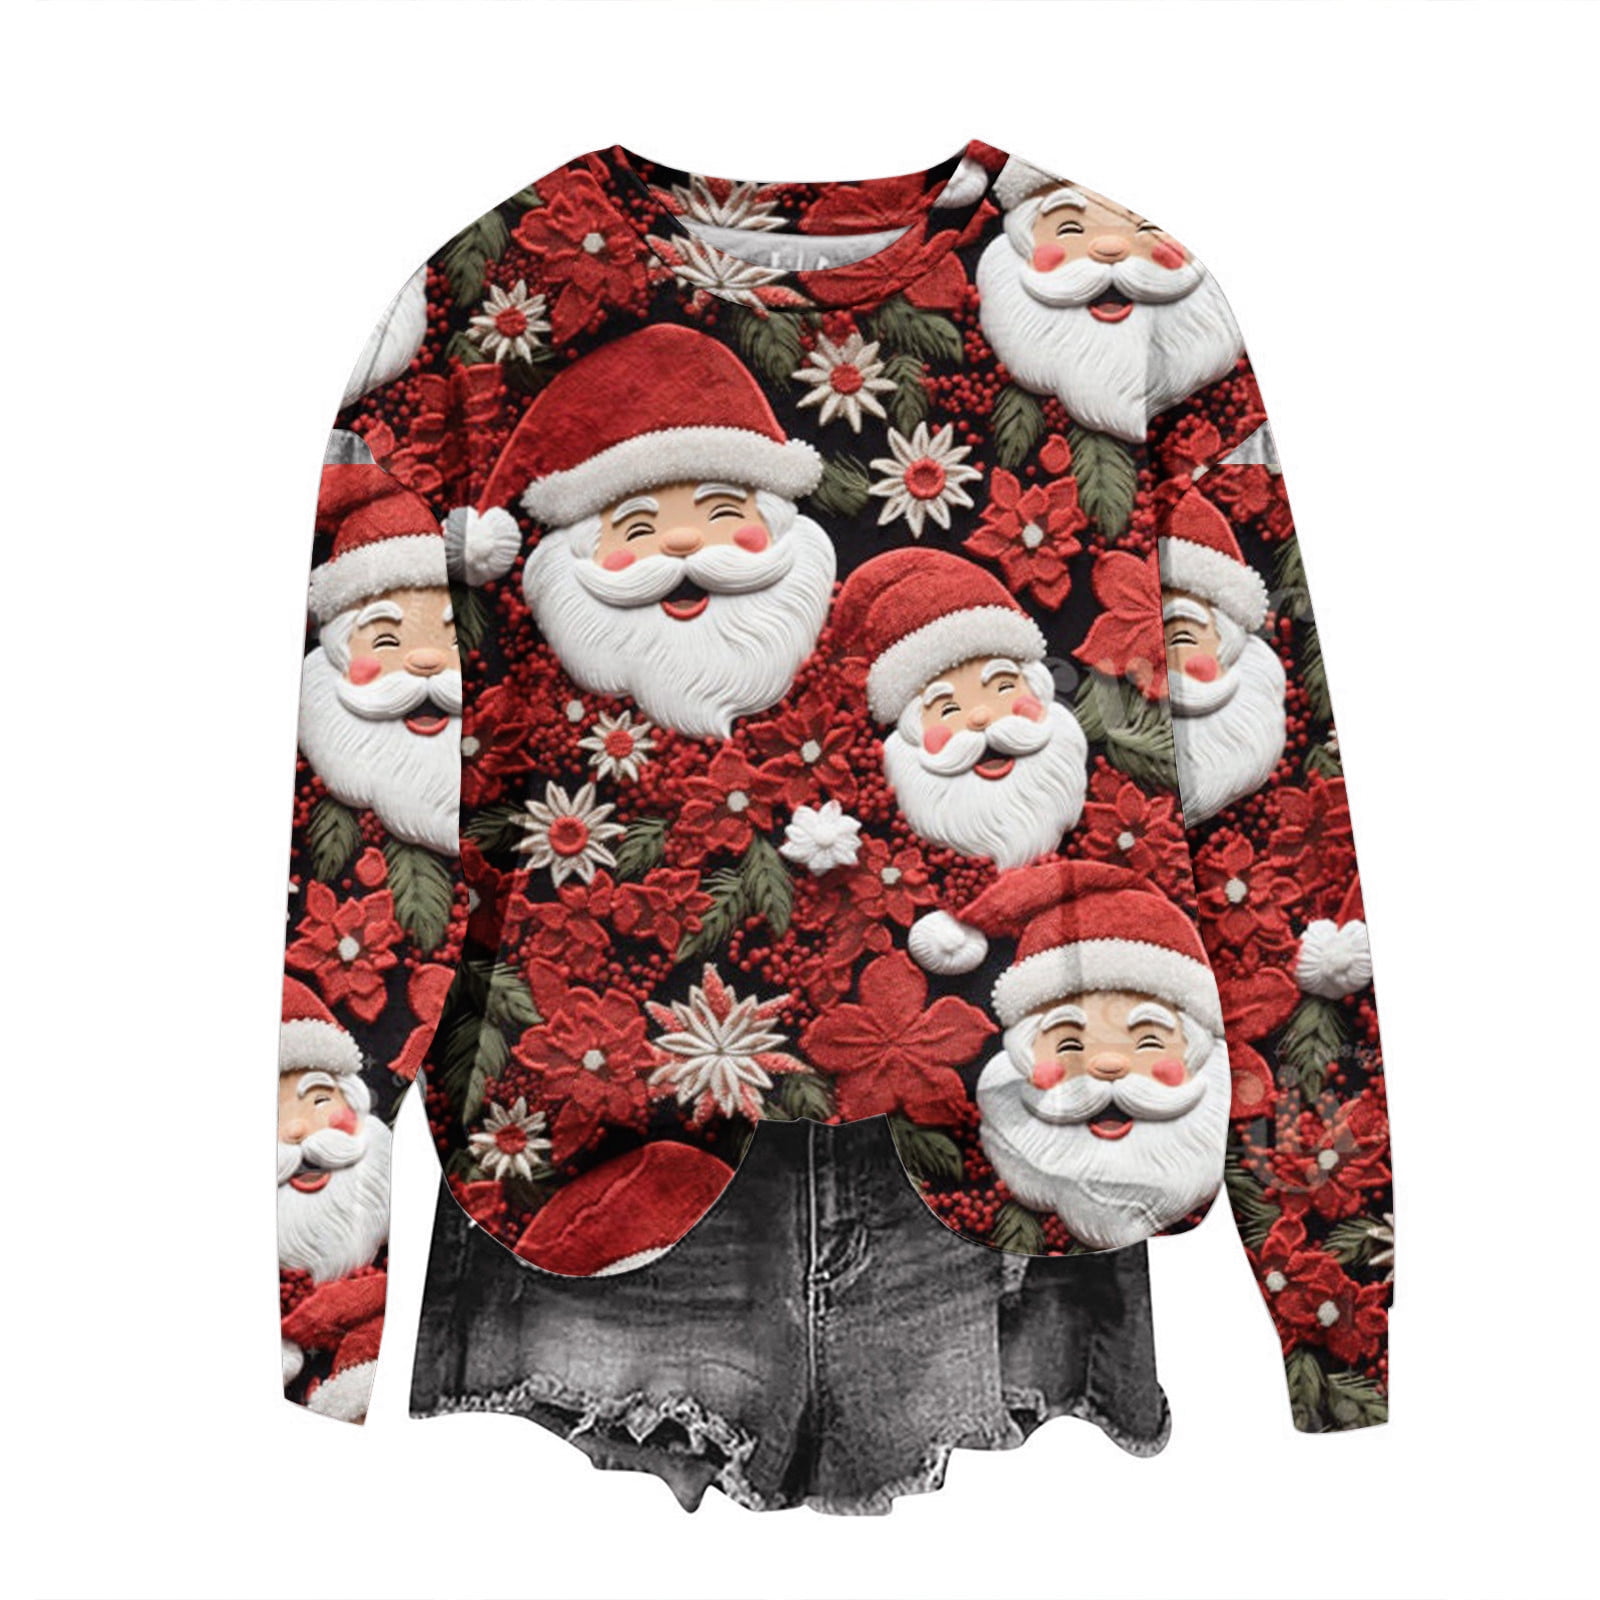 Wholesale Christmas Preppy Style Santa Claus Festival Sweater